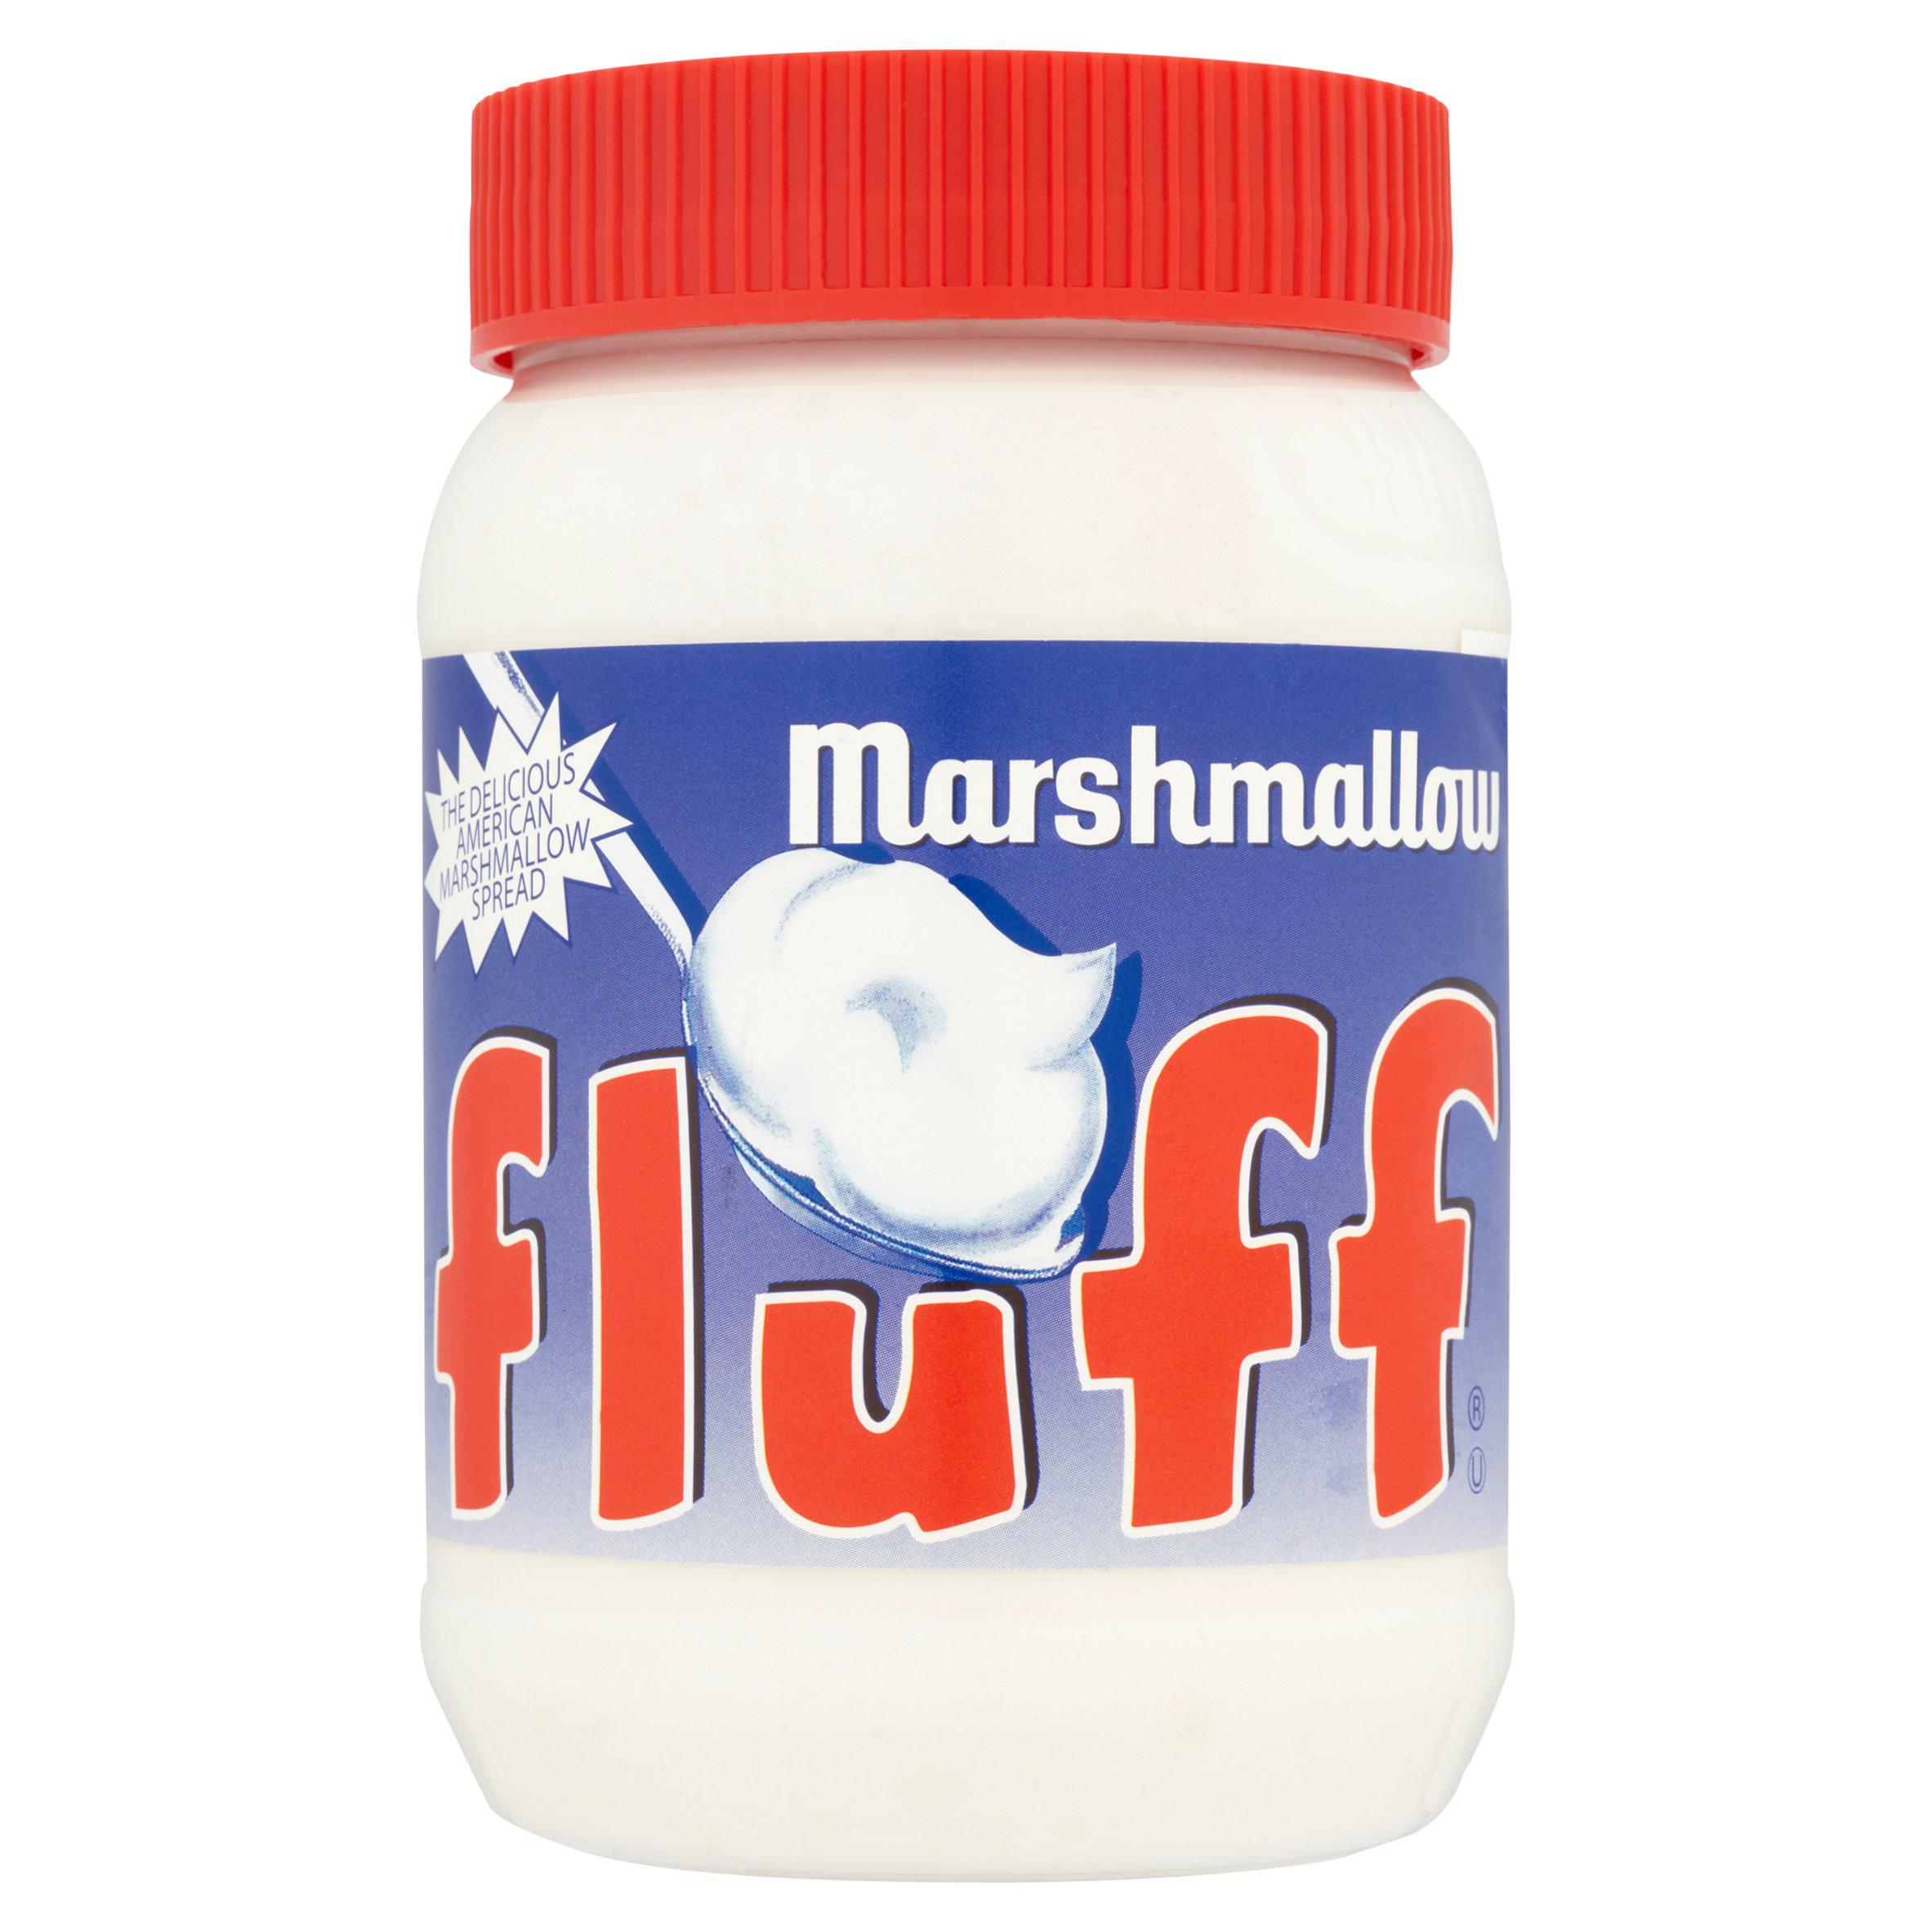 Marshmallow Fluff 213g.